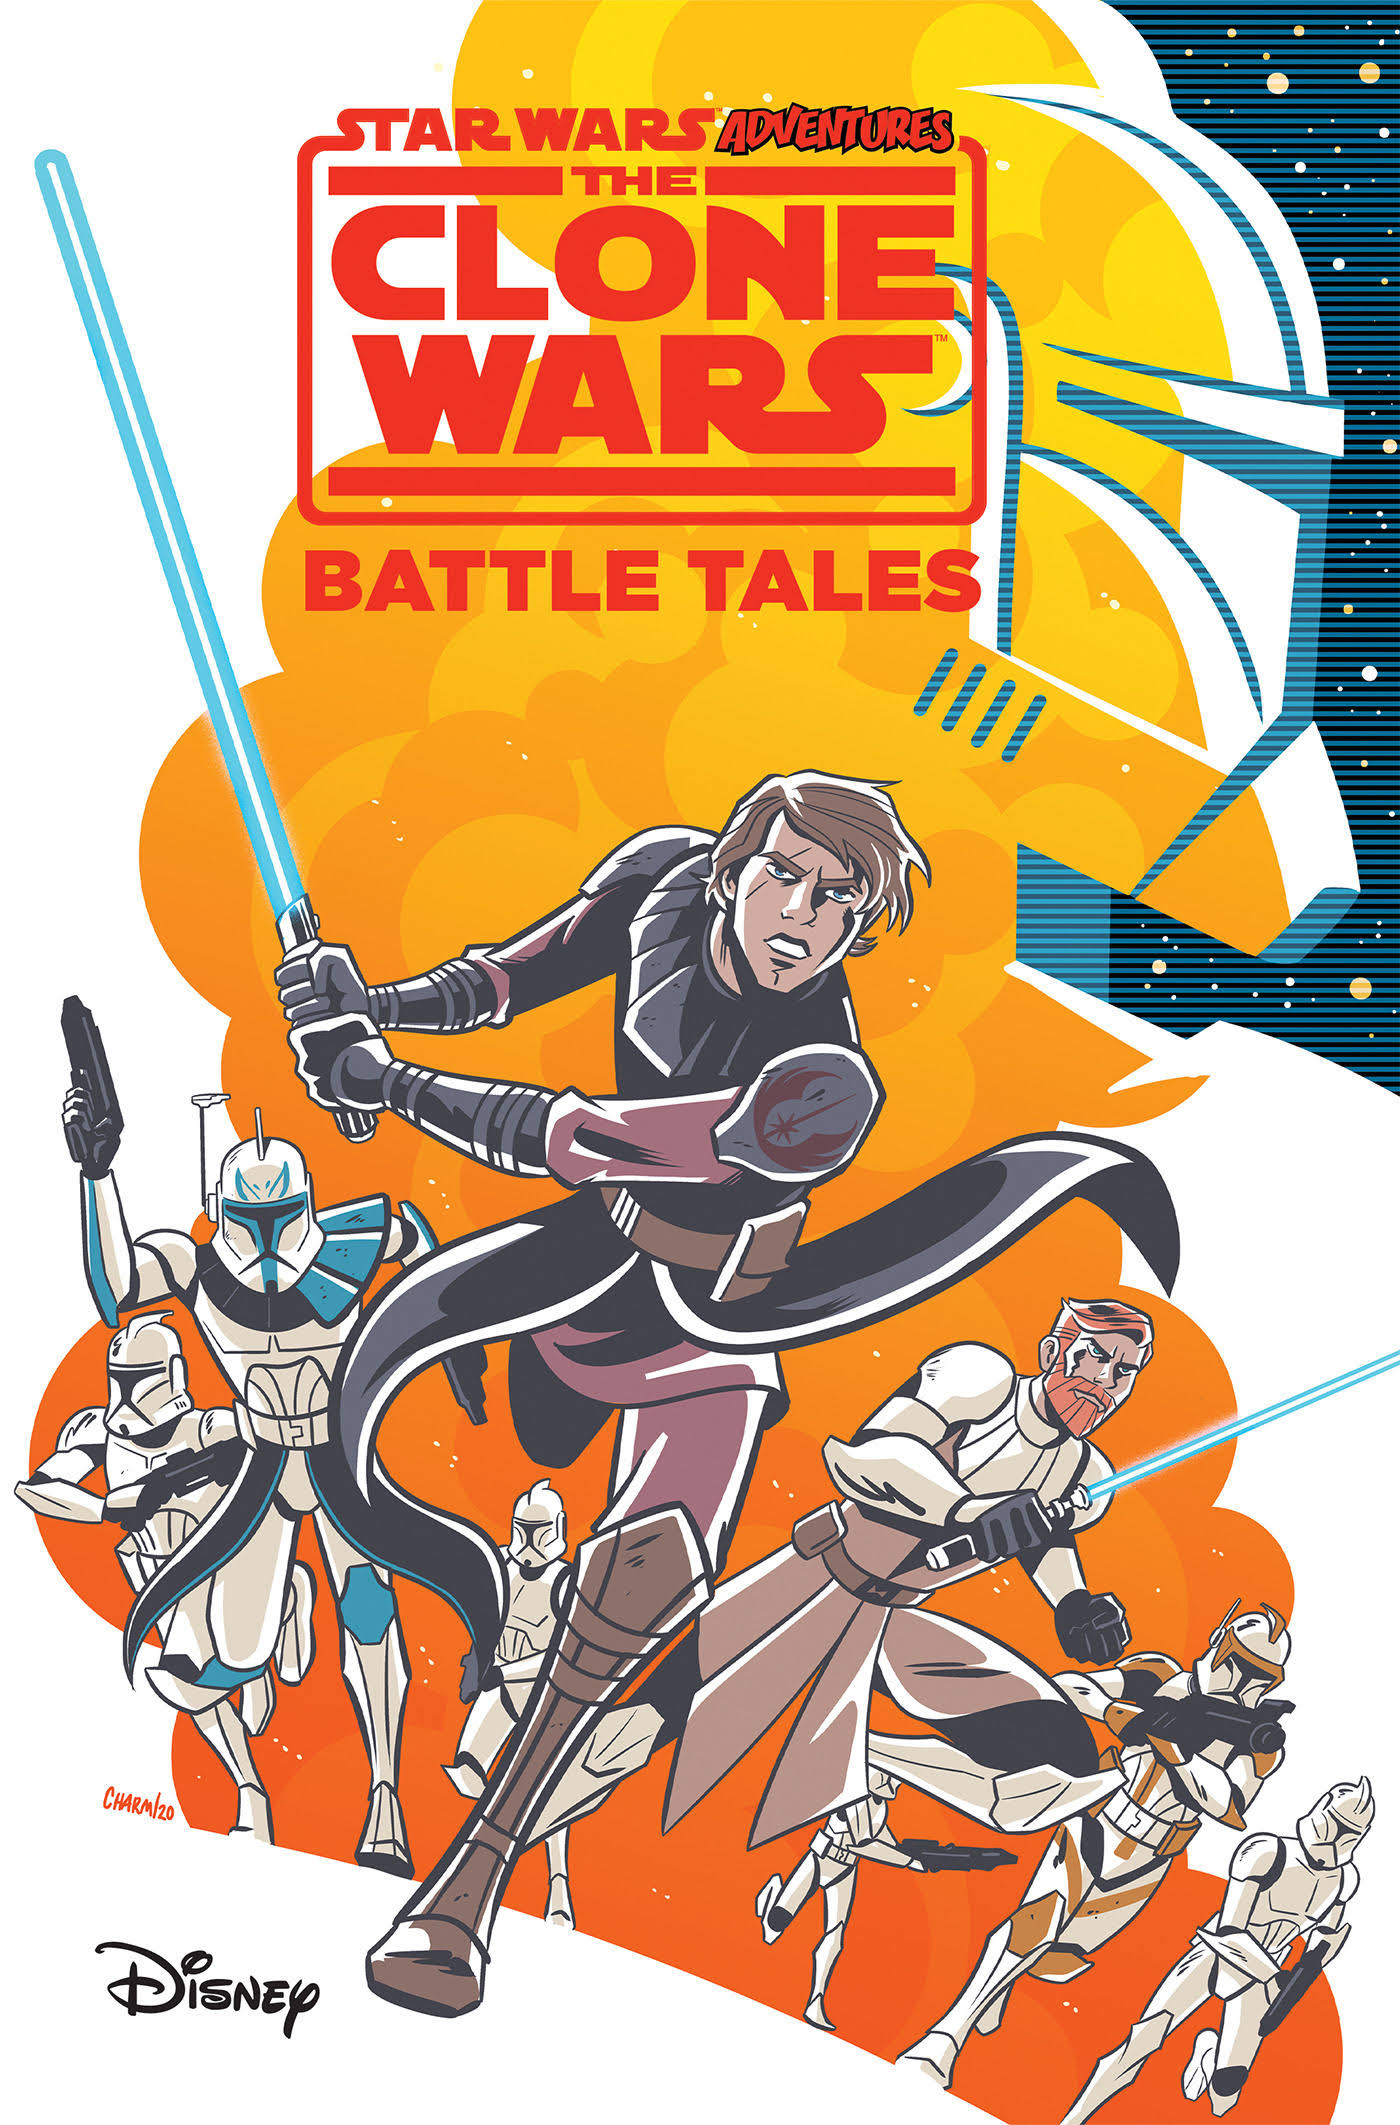 Star Wars Adventures: The Clone Wars - Battle Tales [Book]